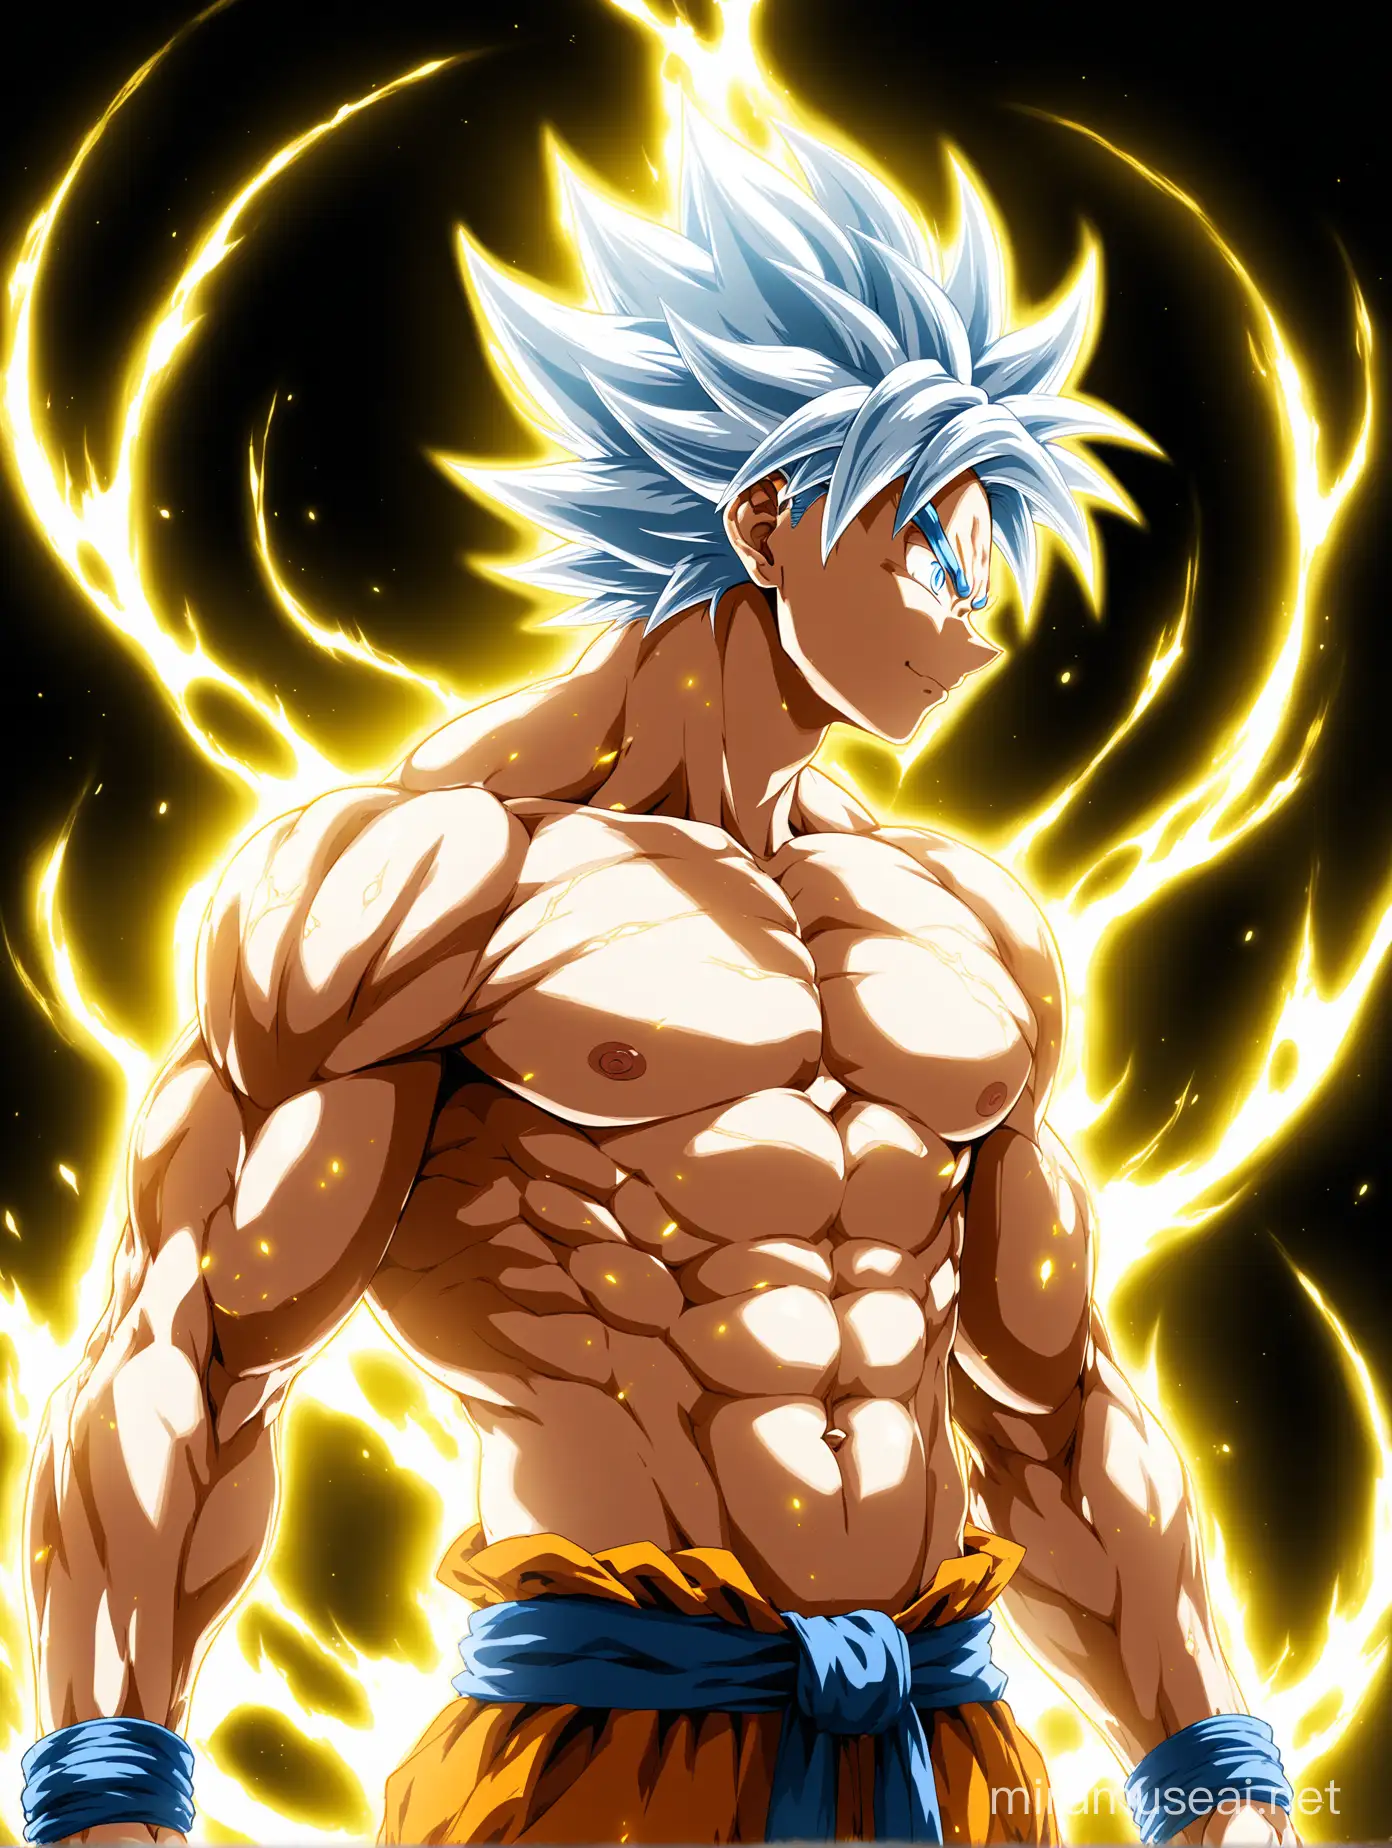 Shirtless Goku WhiteYellow Transformation with Ultra Aura